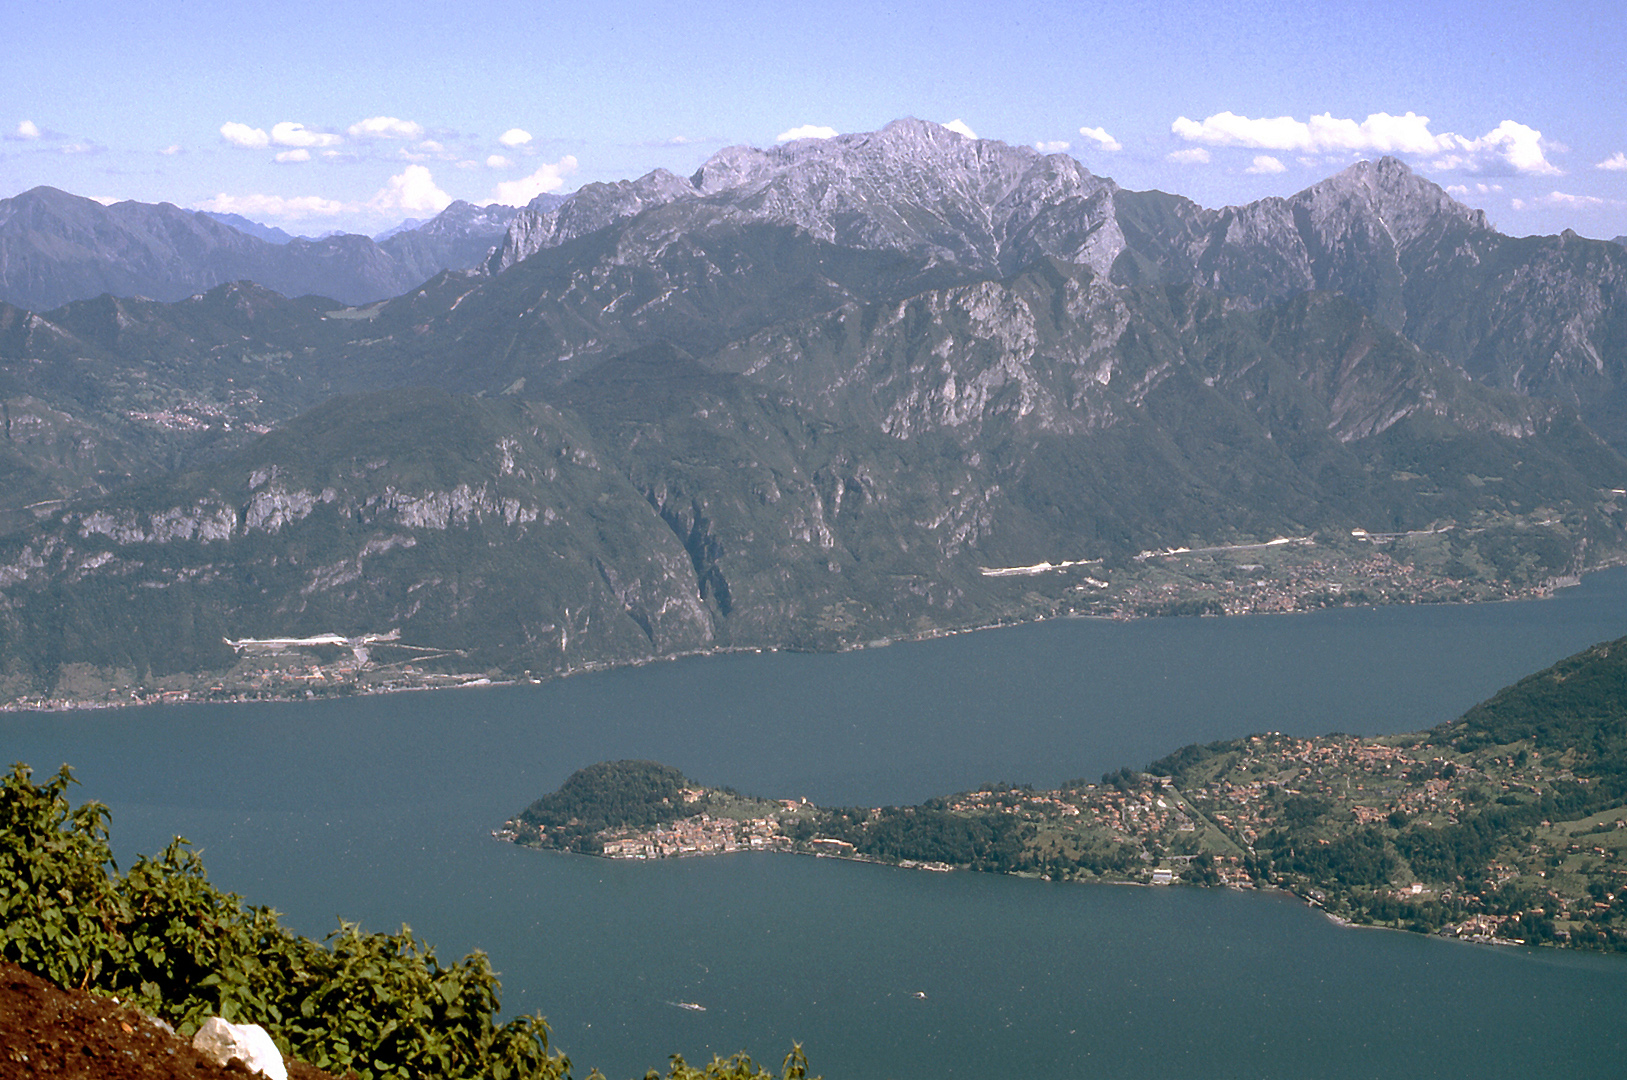 Comomeer (Lombardije, Itali); Lake Como (Lombardy, Italy)